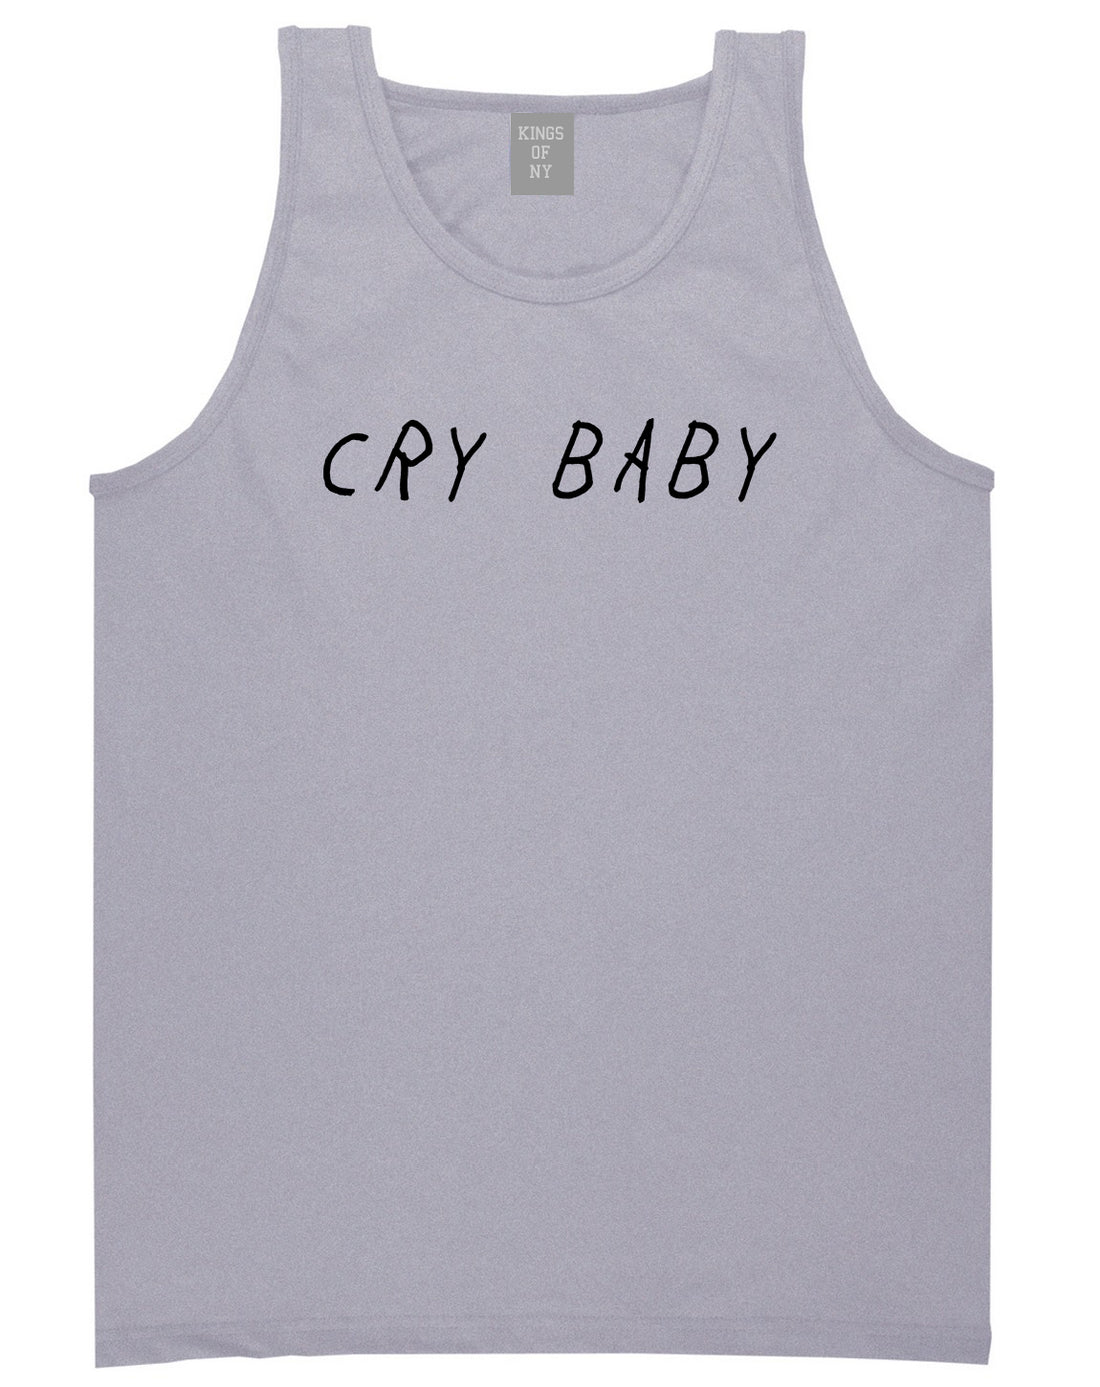 Cry_Baby Mens Grey Tank Top Shirt by Kings Of NY